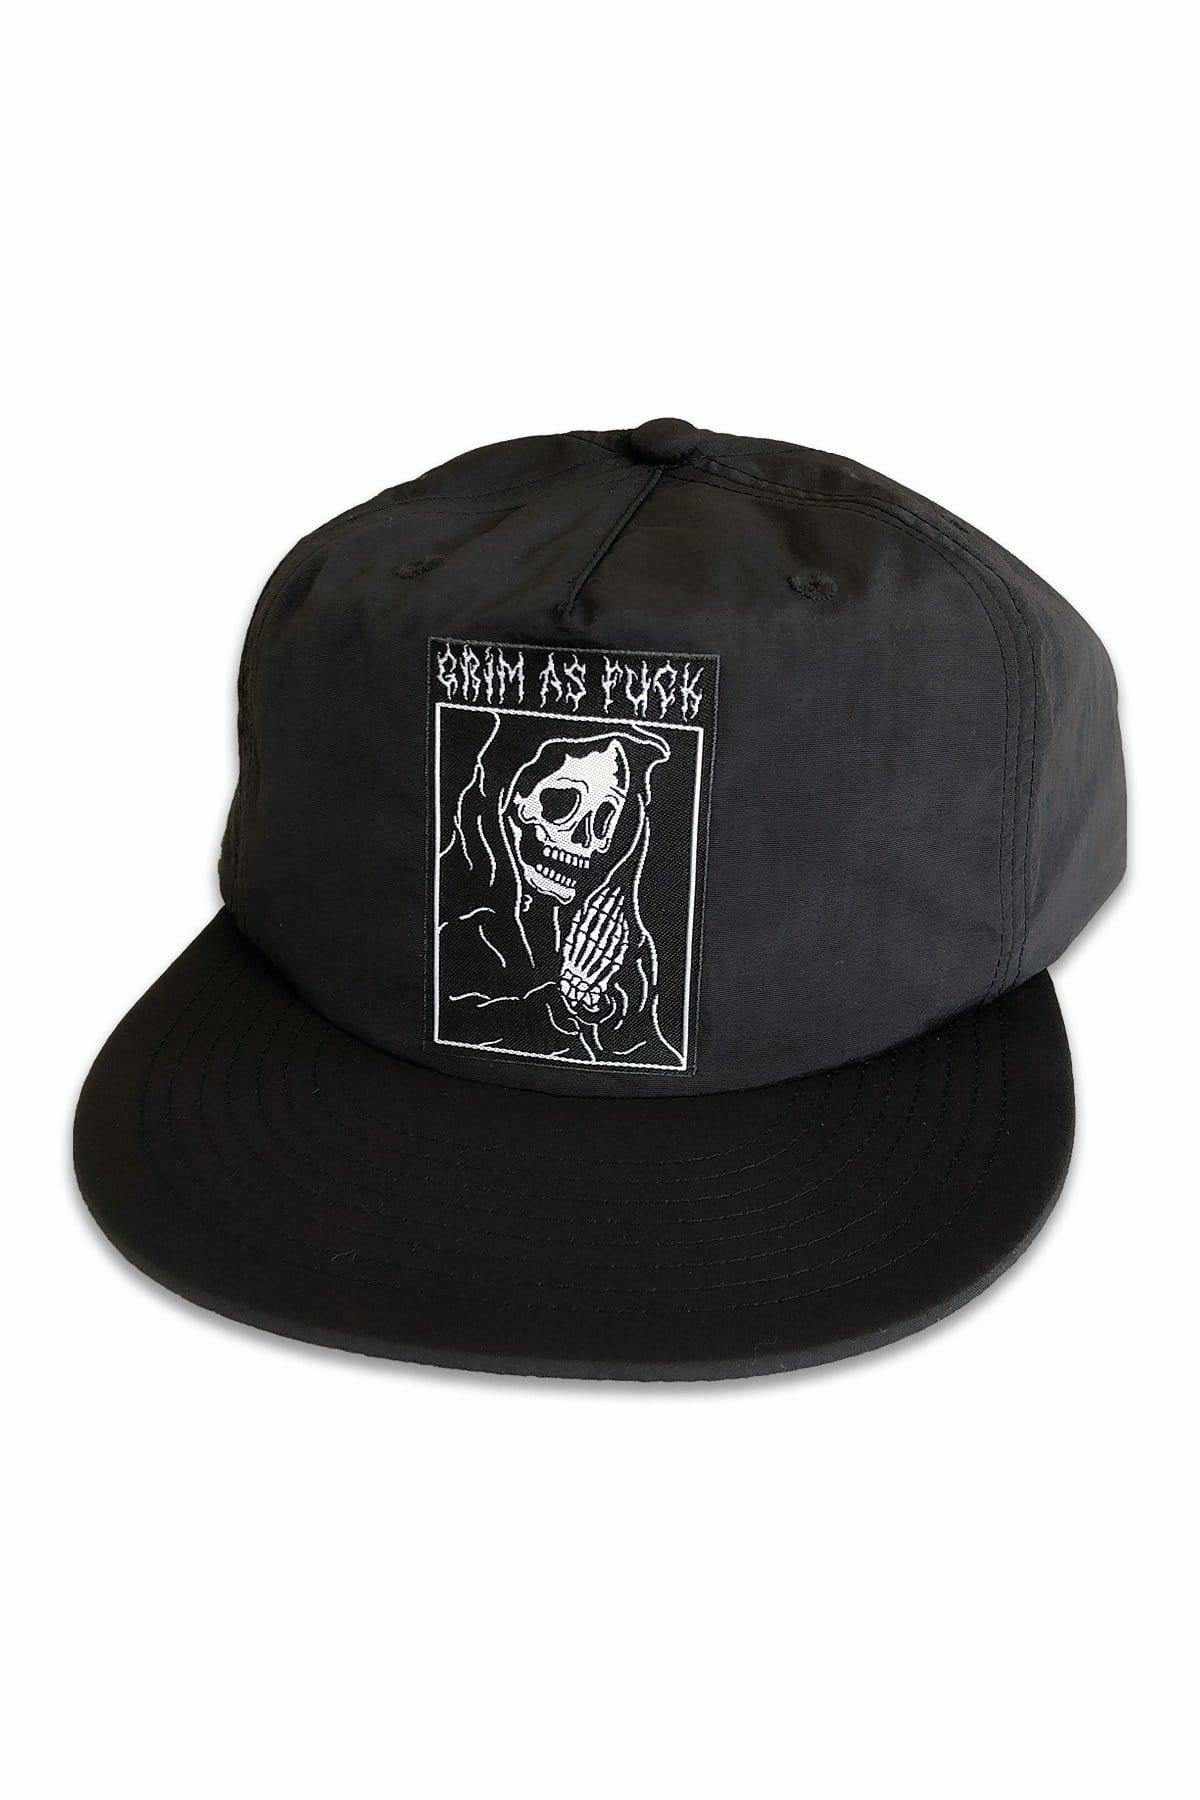 Grim Skate Hat | Alternative, Gothic & Occult Clothing Fashion Brand Australia - Electric Witch